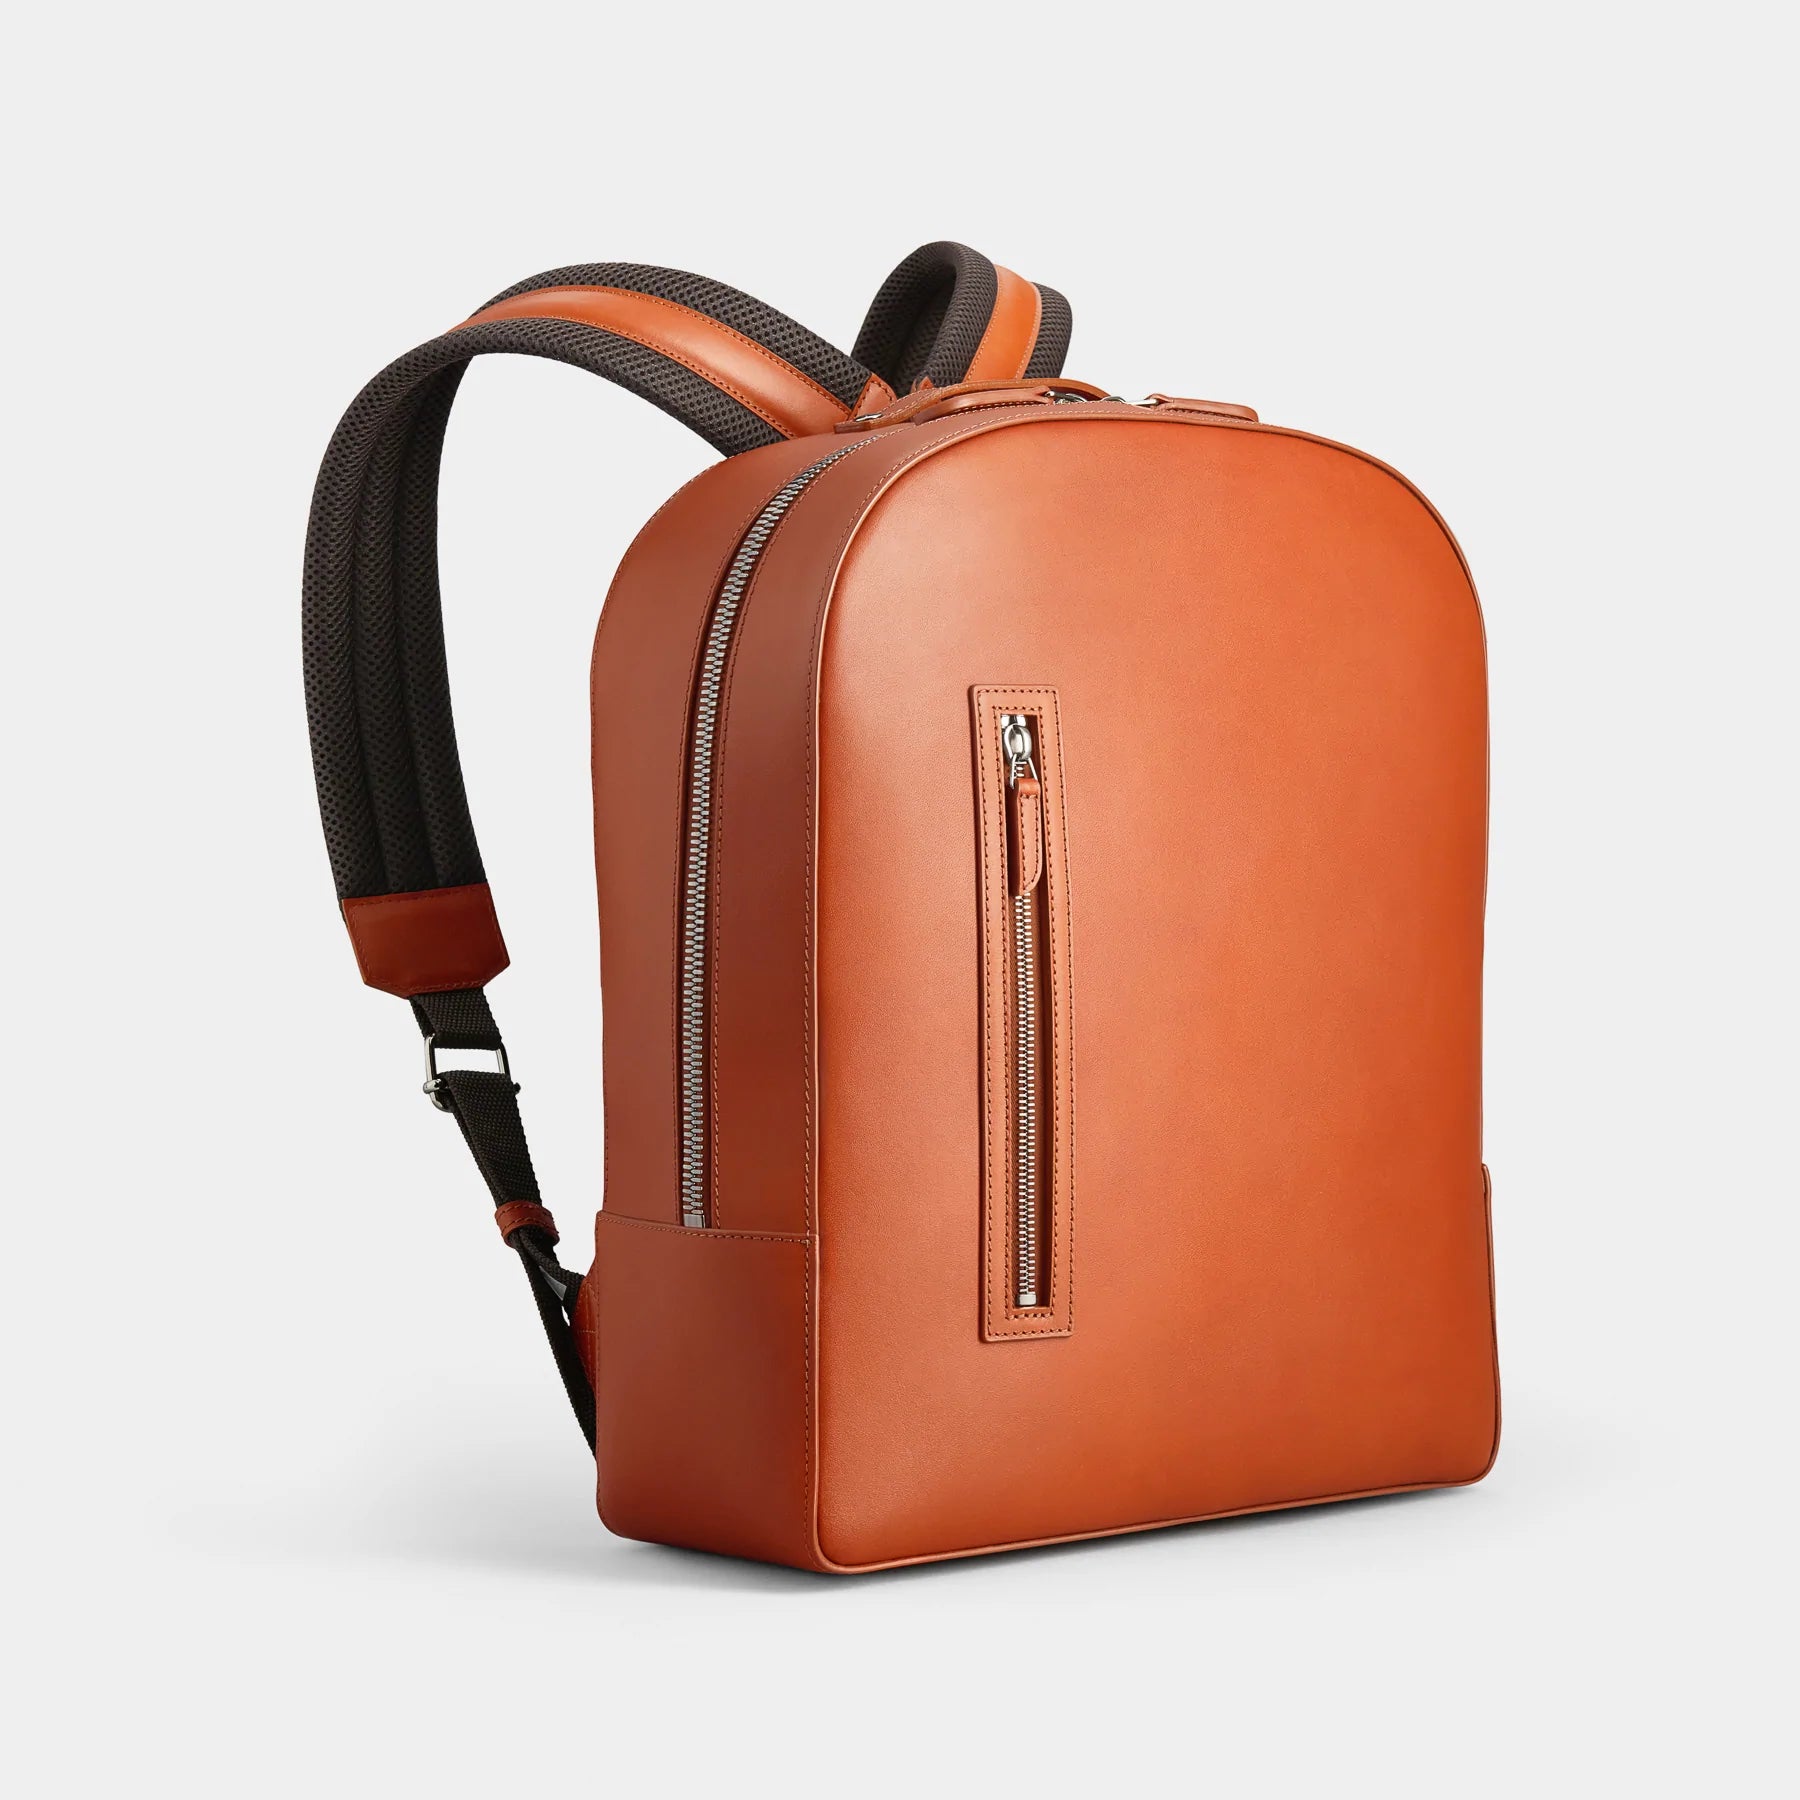 Bowen - Return Cognac All-leather backpack - Fair Condition